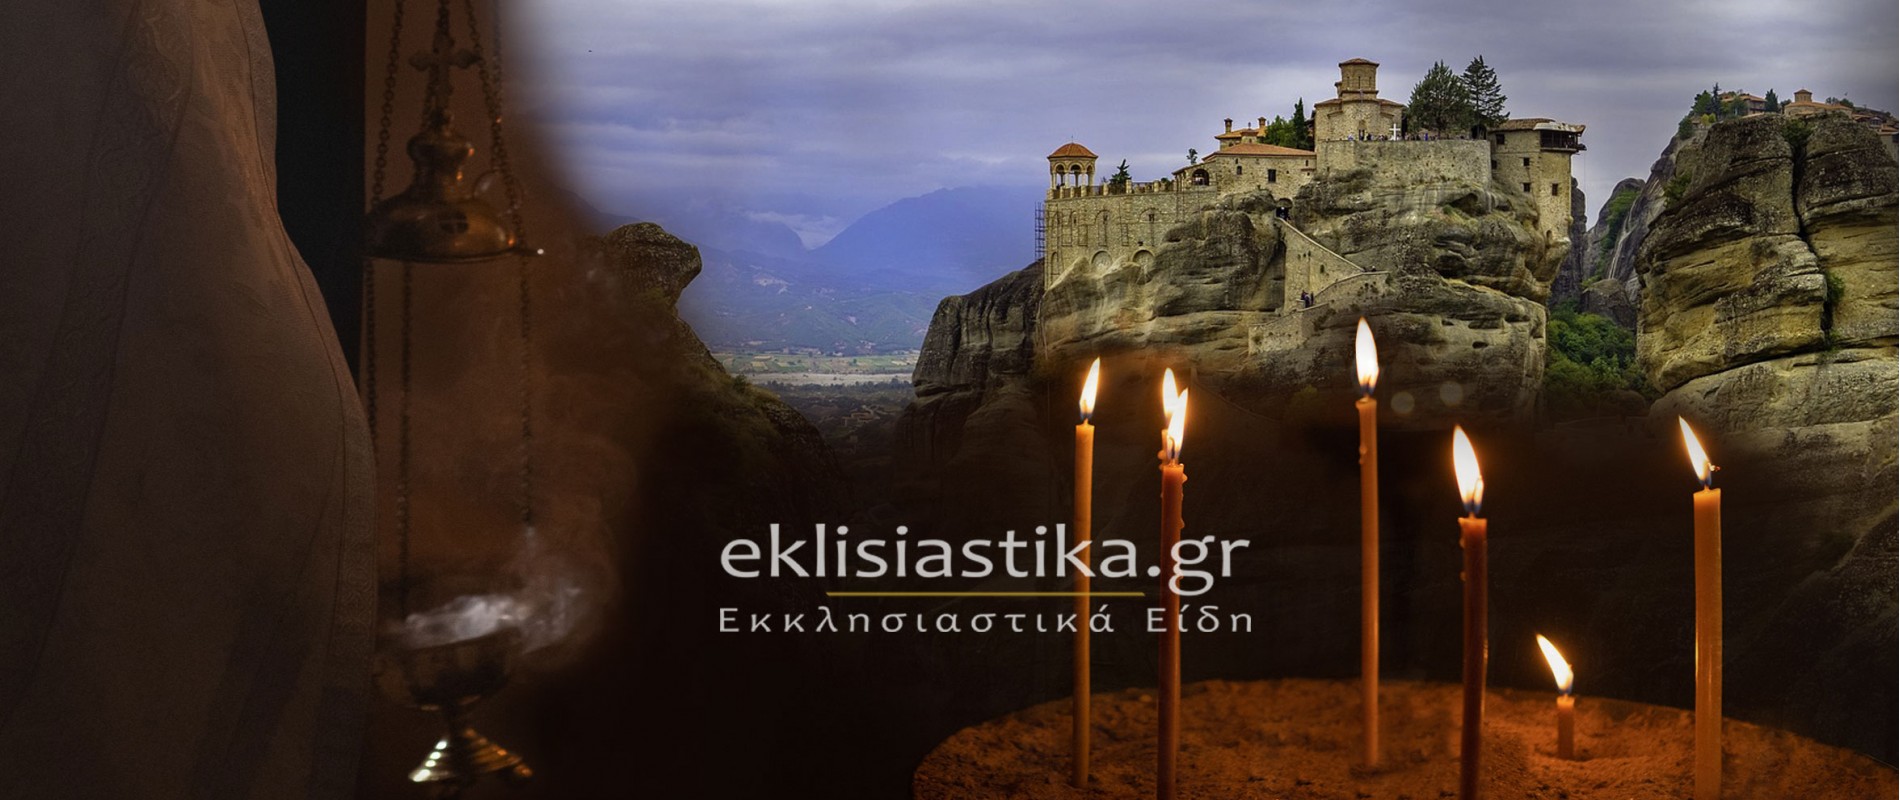 eklisiastika.gr